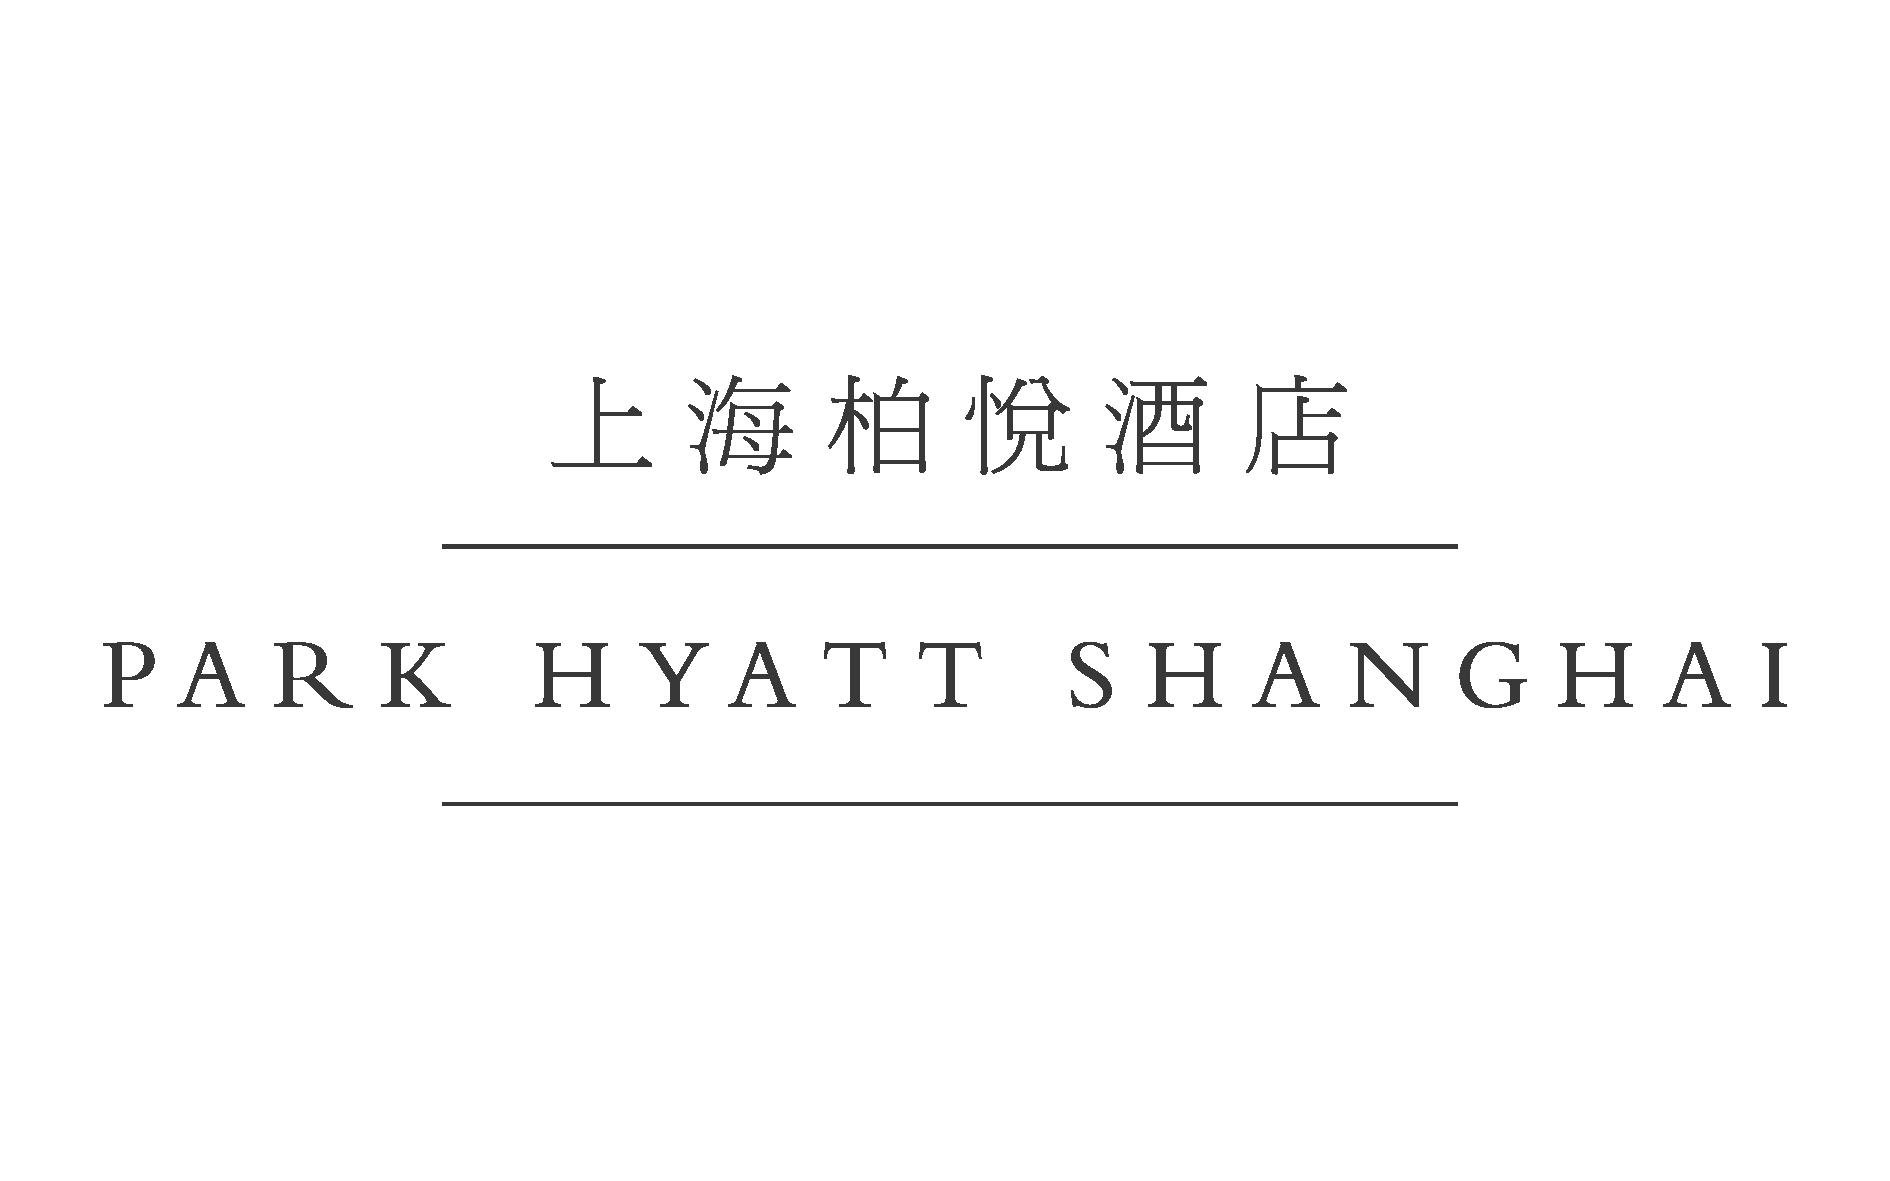 Grand Hyatt Shanghai, China